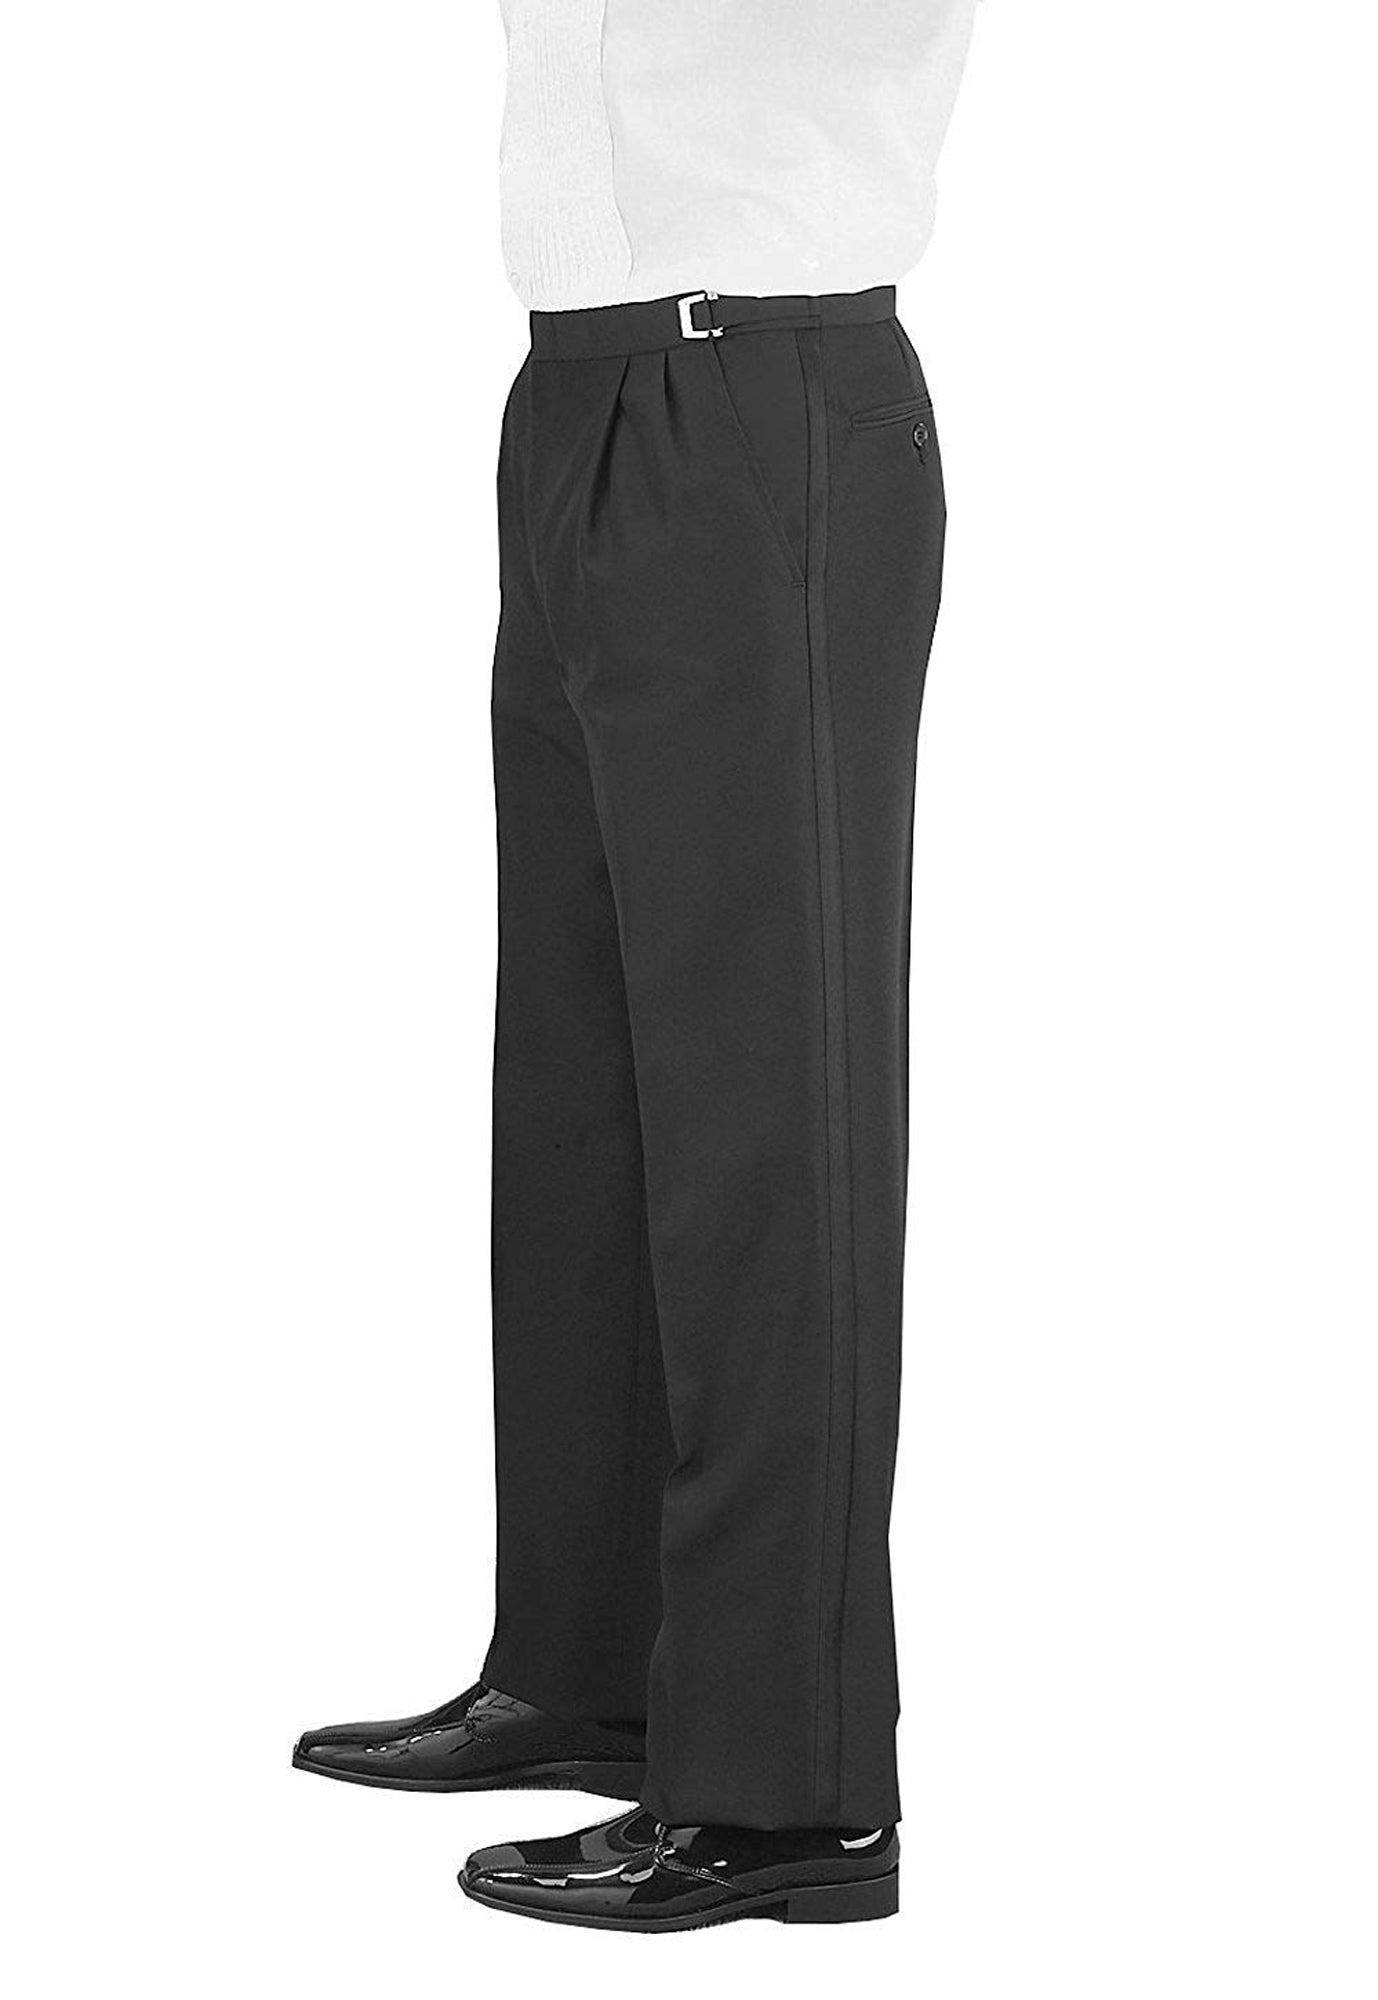 Adjustable Waist Pants | Gap Factory